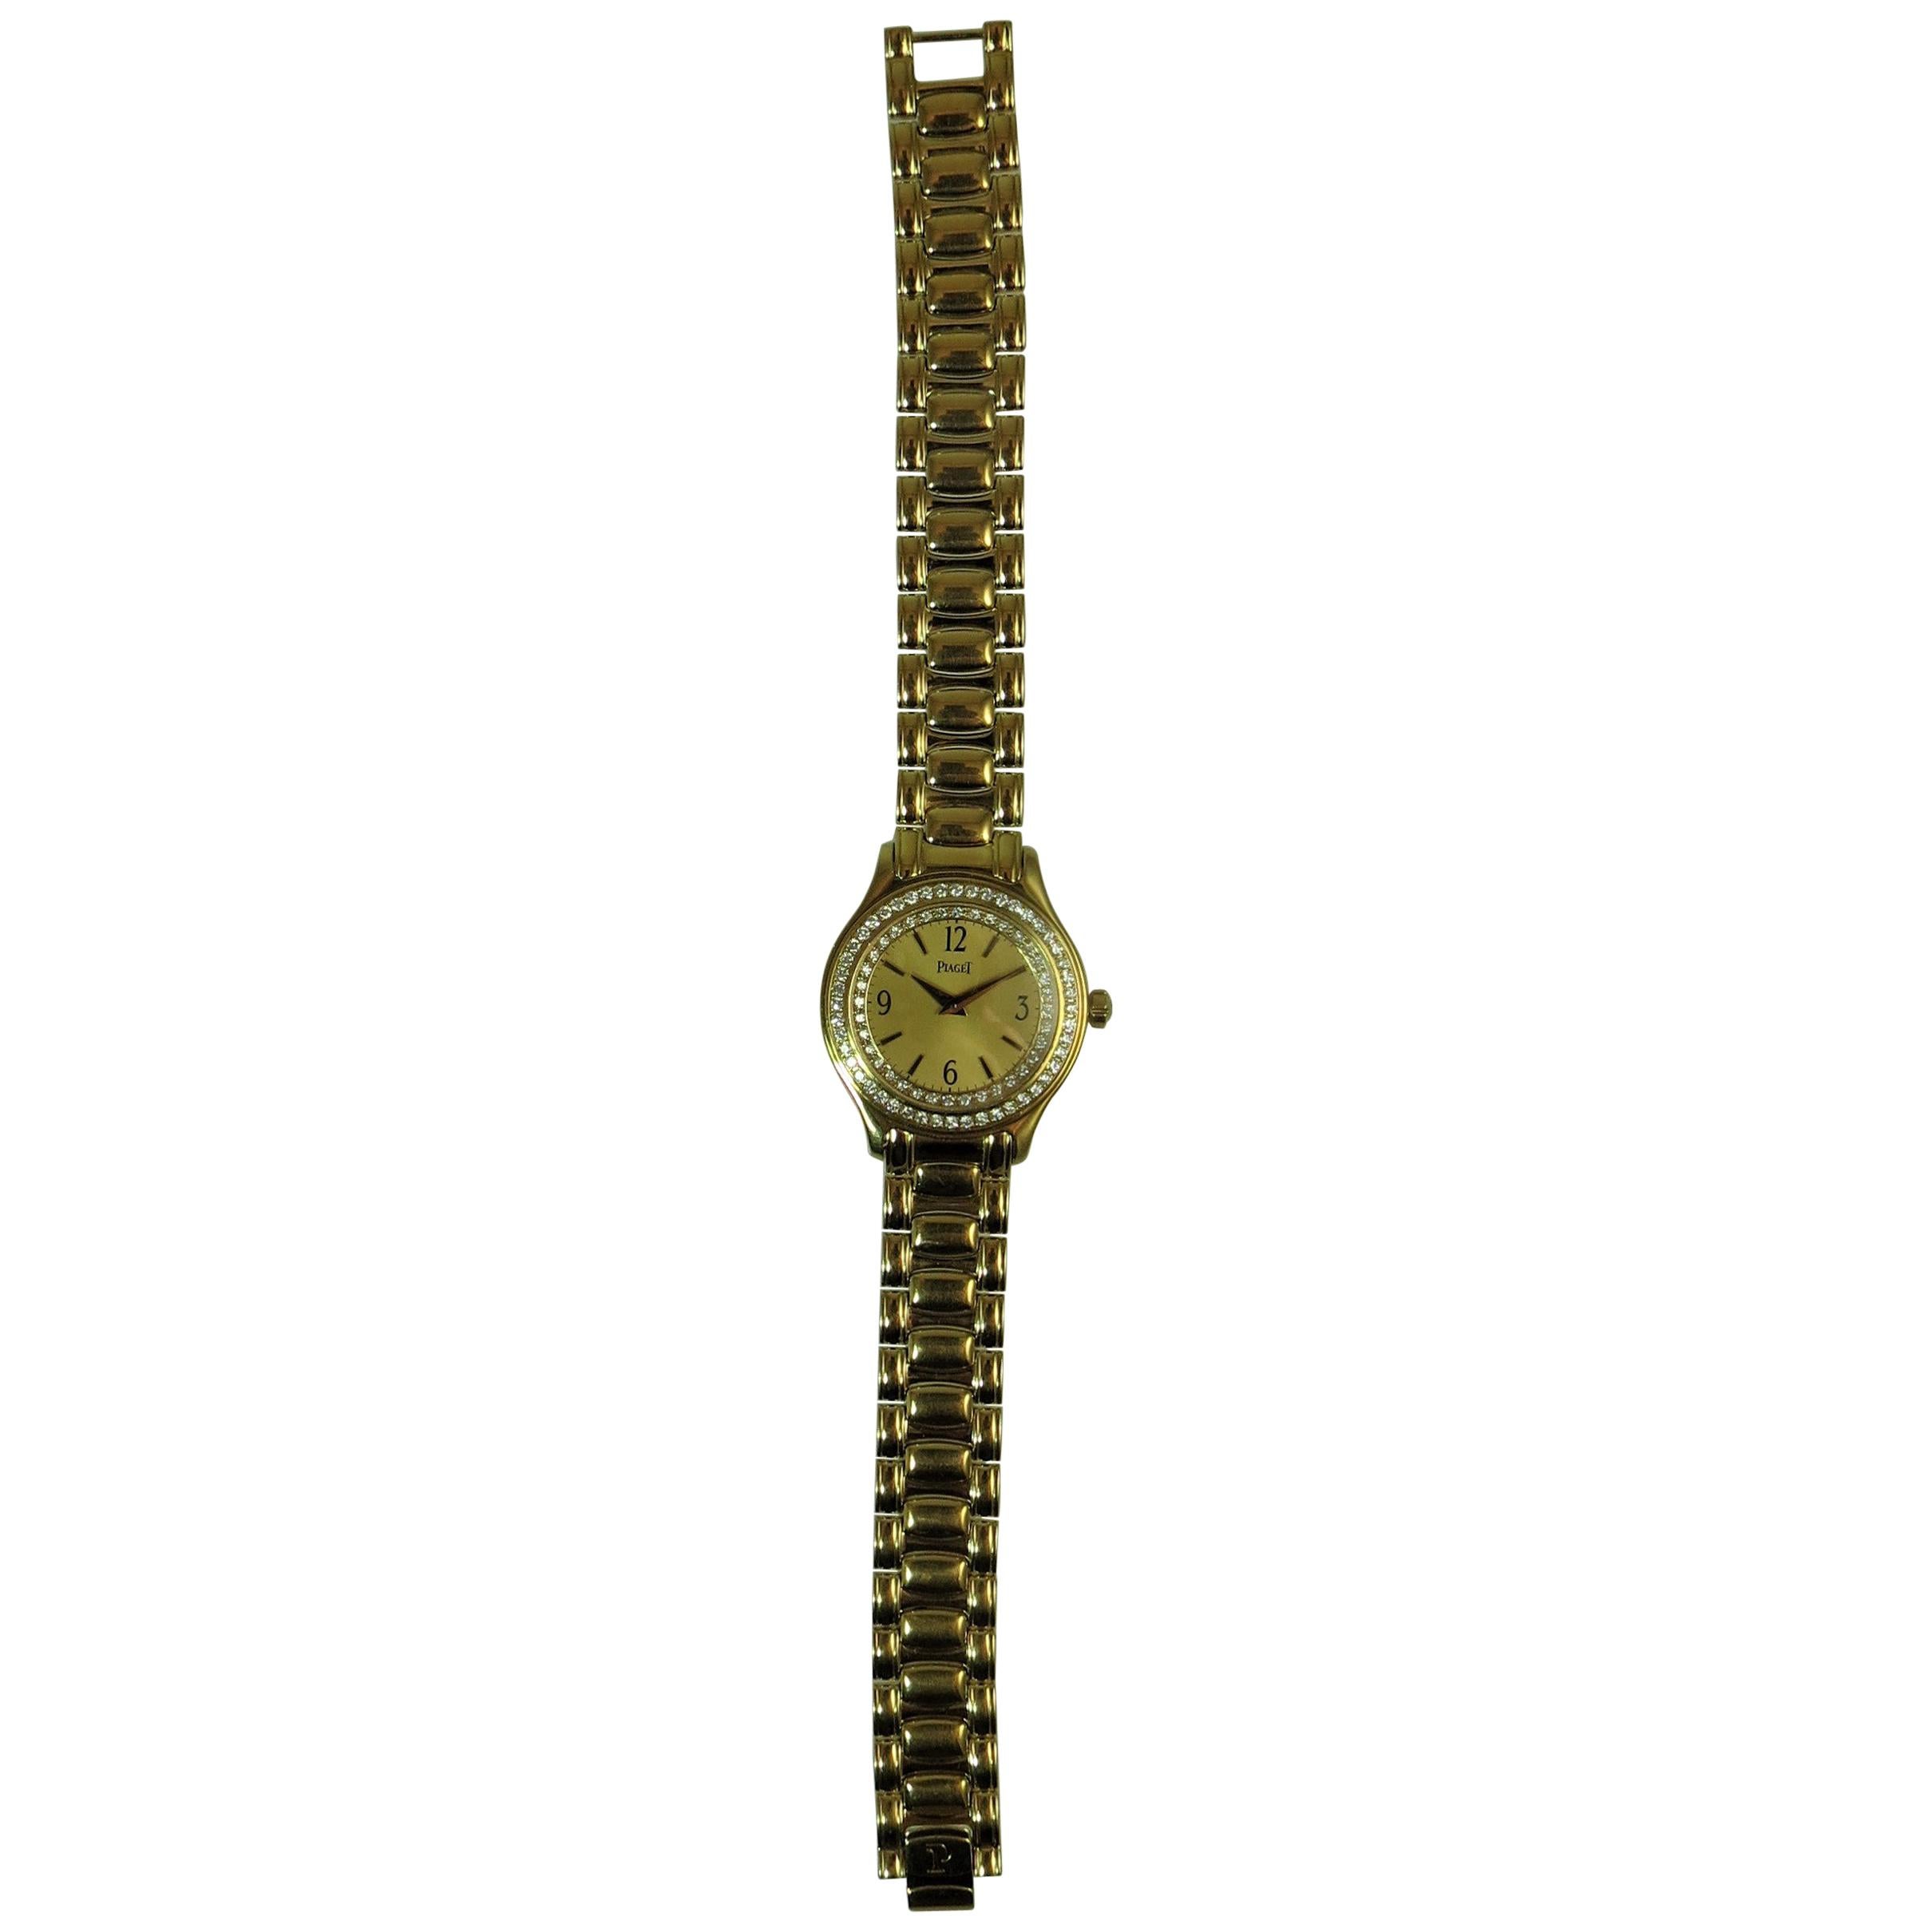 New Piaget 18 Karat Yellow Gold Bracelet Watch with Double Row Diamond Bezel